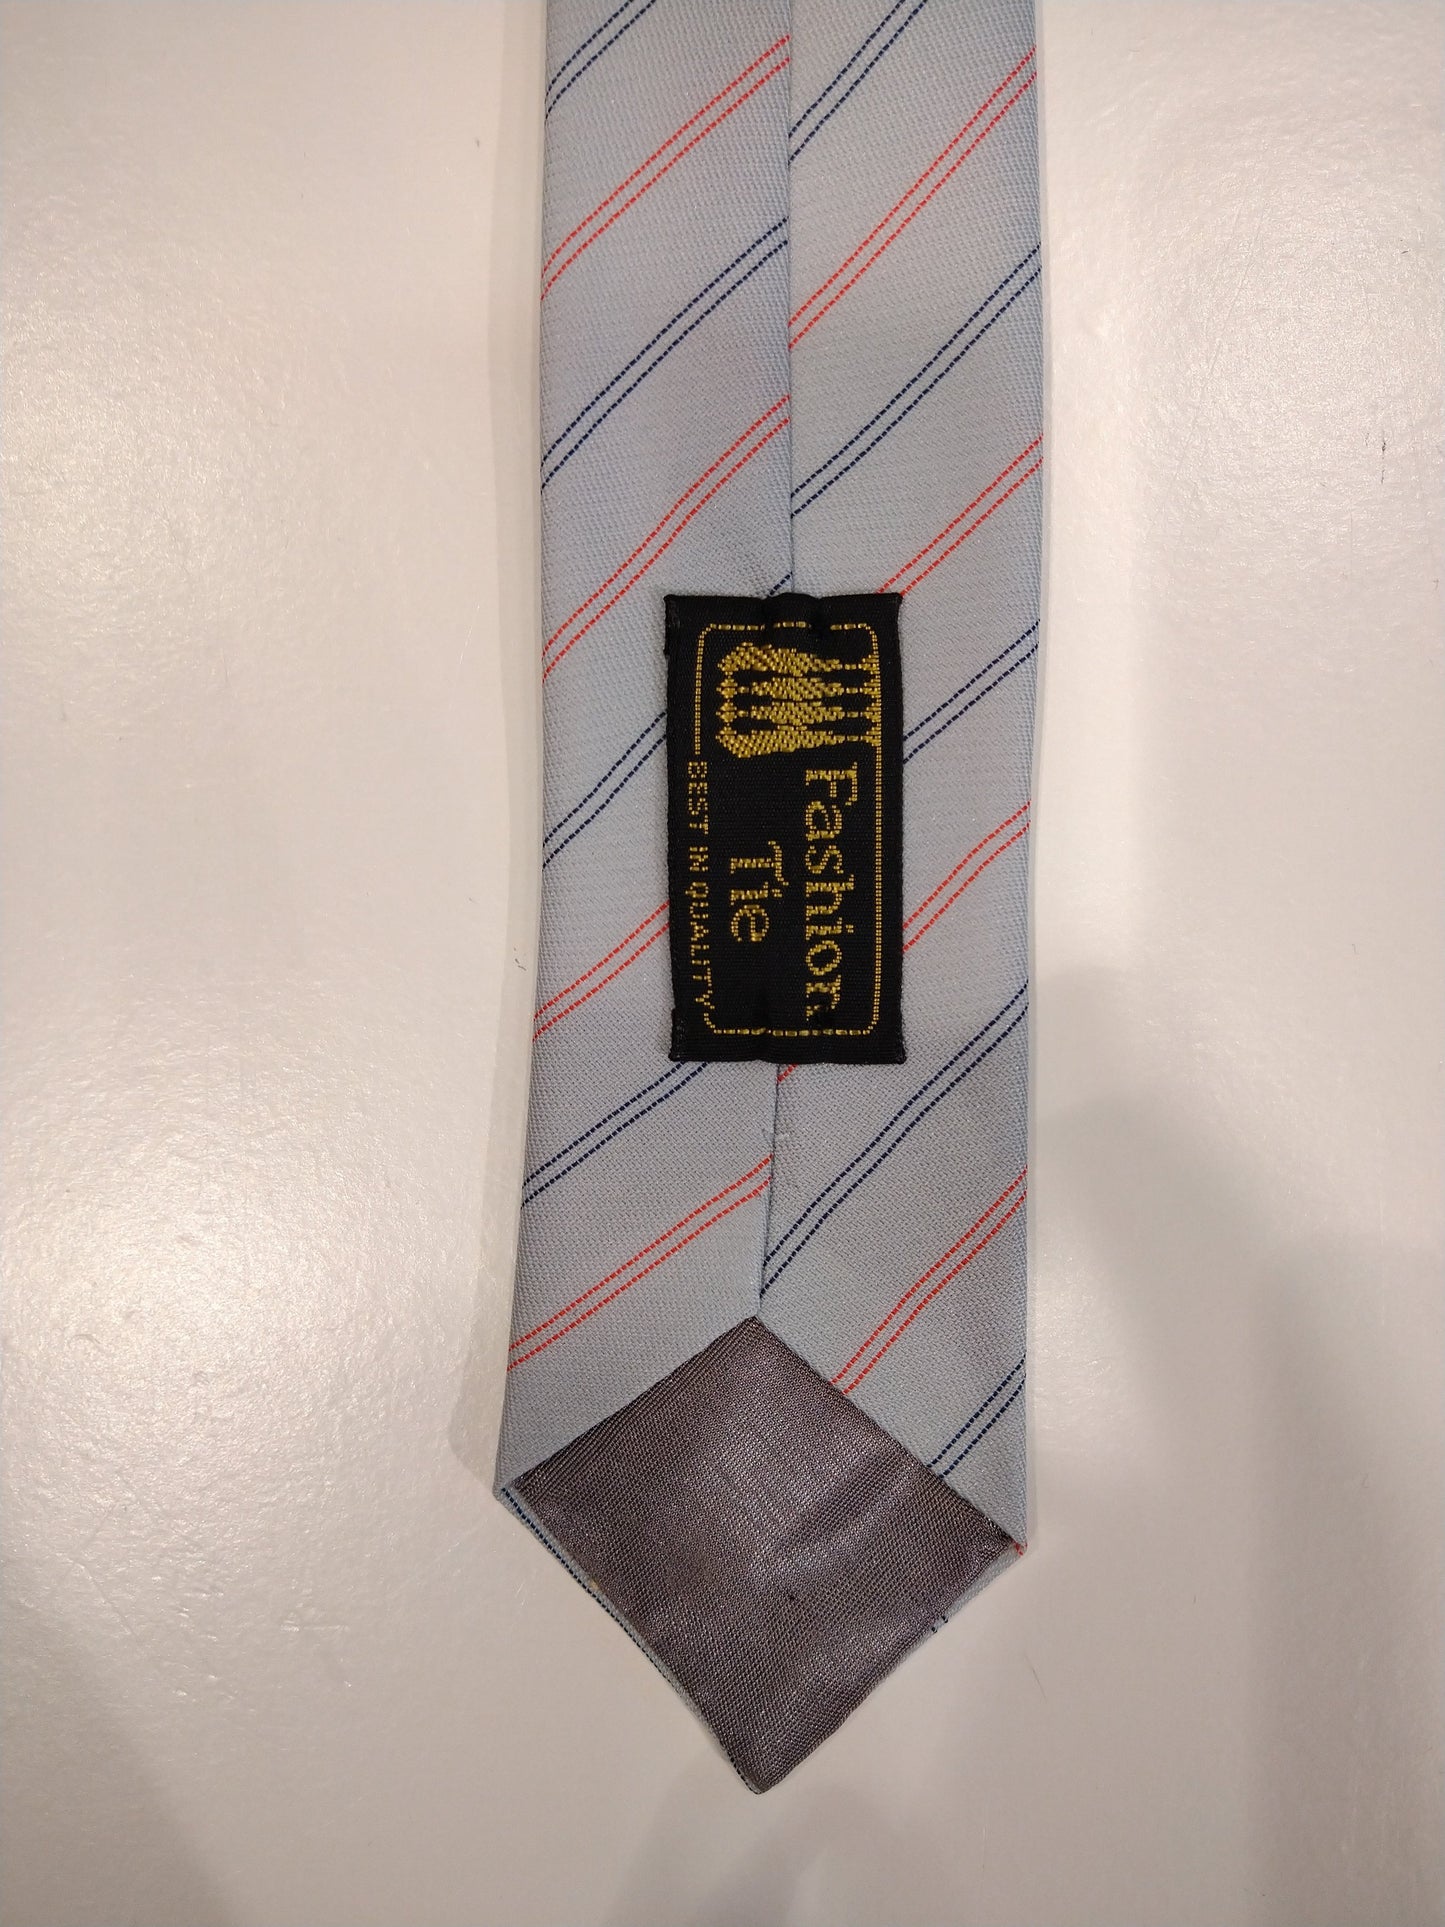 Vintage fashion tie extra narrow tie. Gray blue red striped.